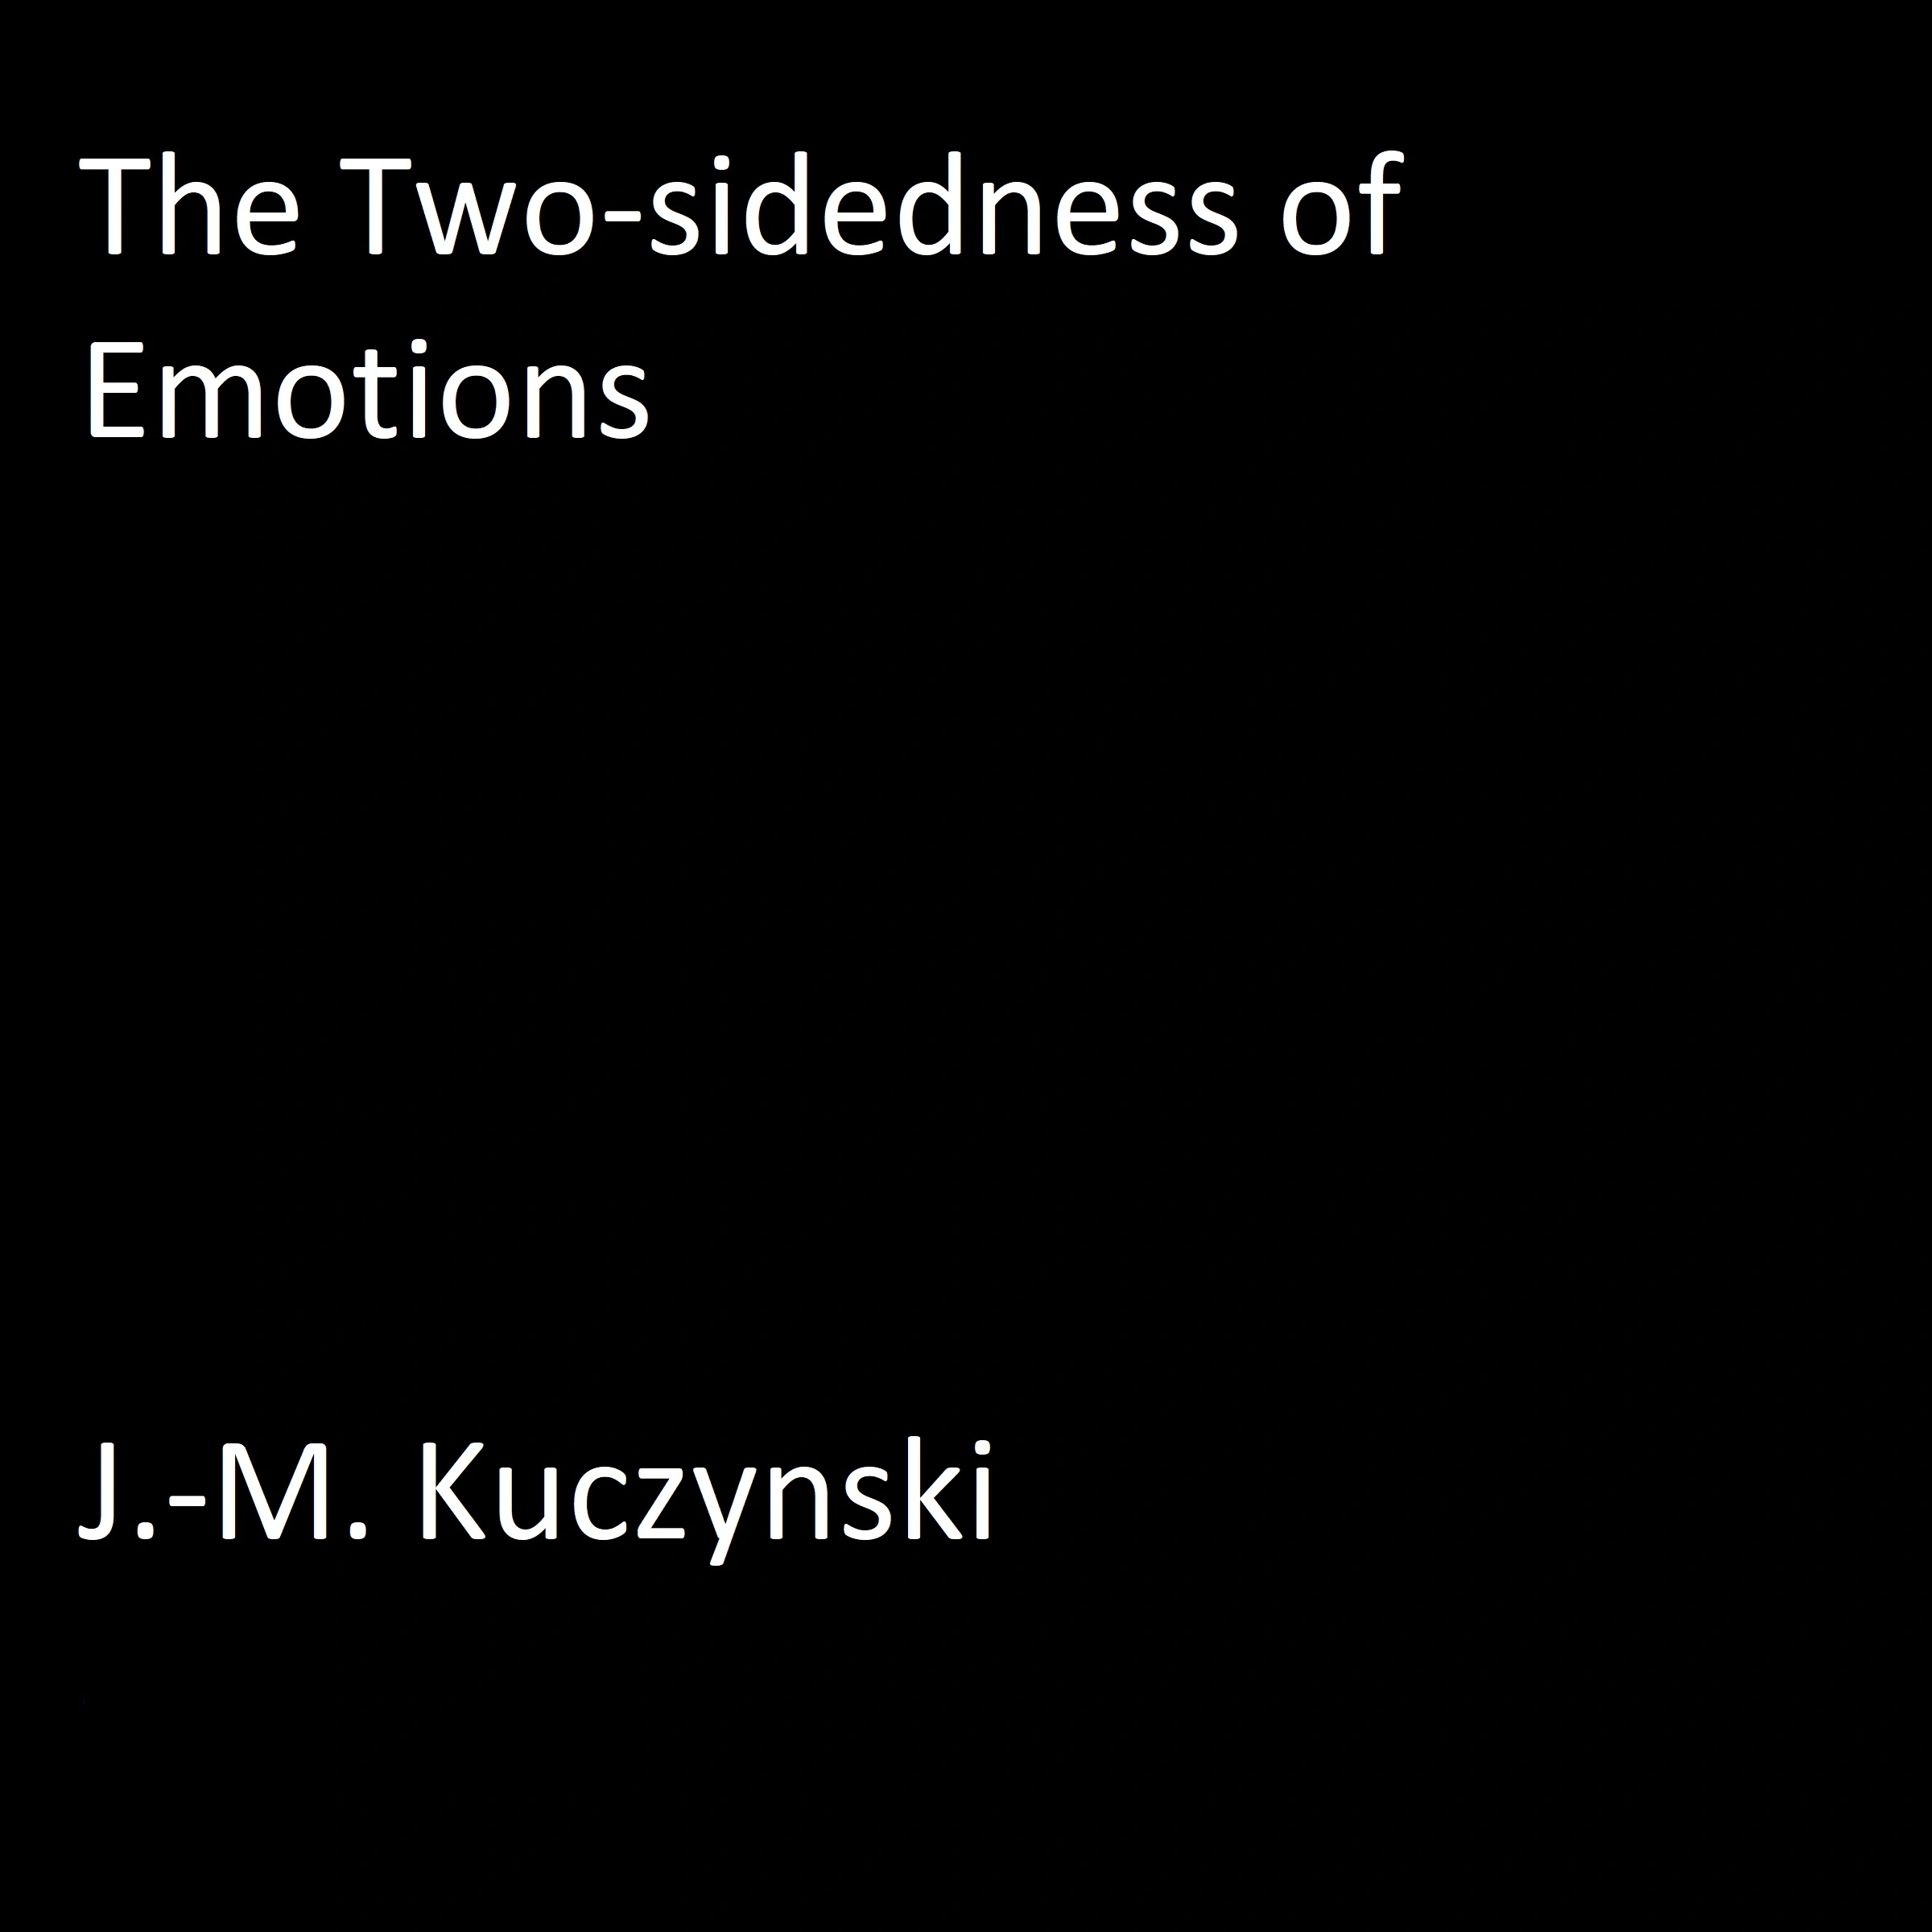 The Two-sidedness of Emotions Audiobook by J.-M. Kuczynski